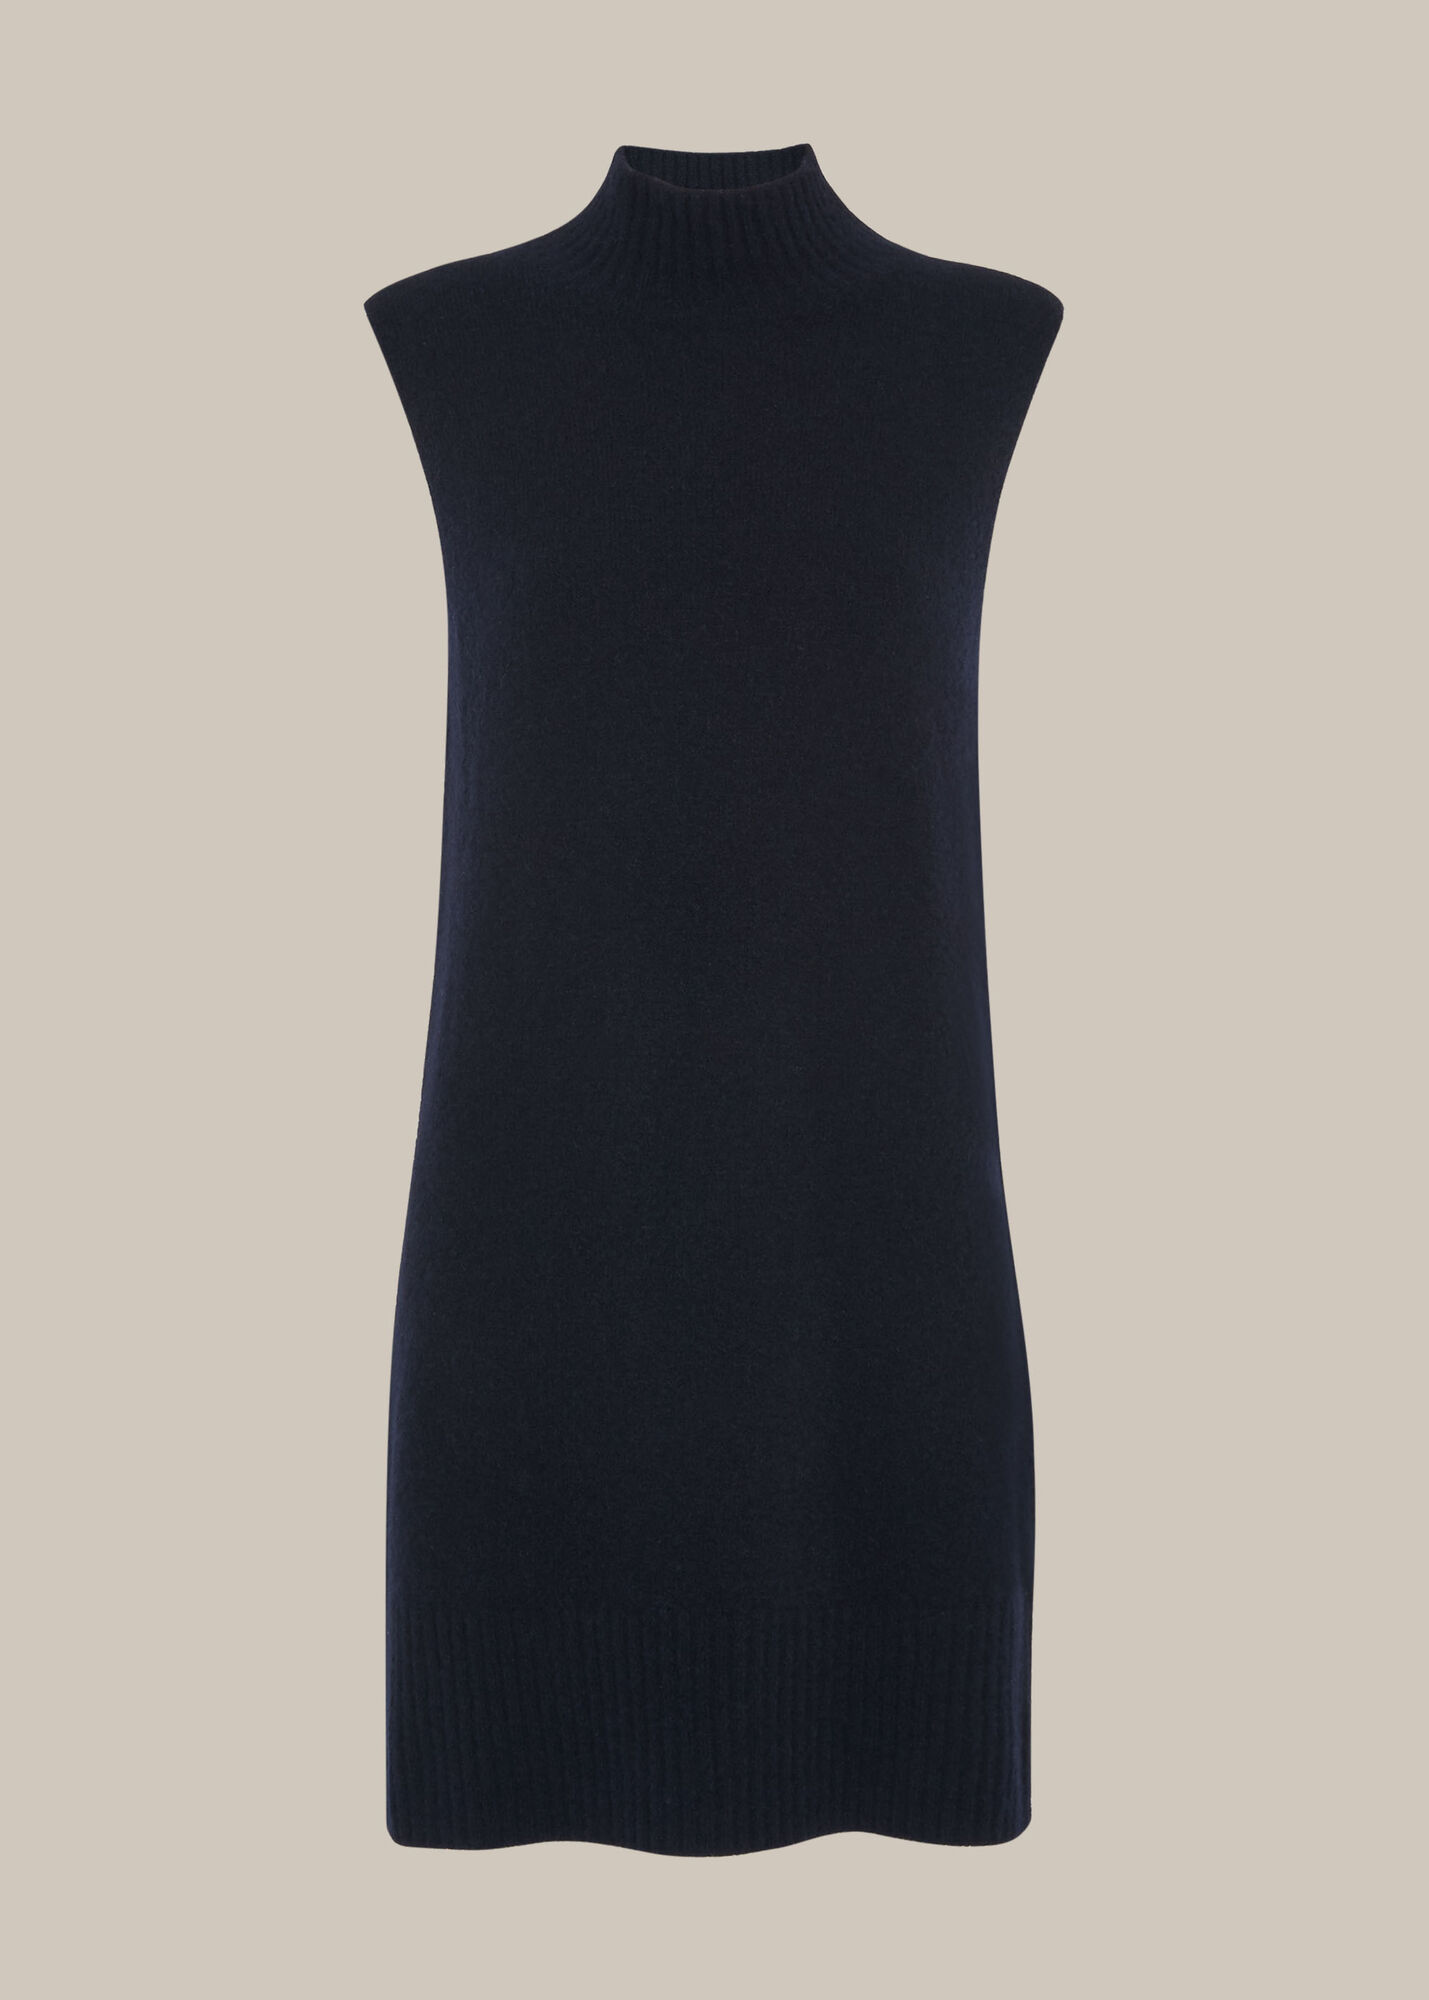 Navy Sleeveless Tunic Knit Dress | WHISTLES